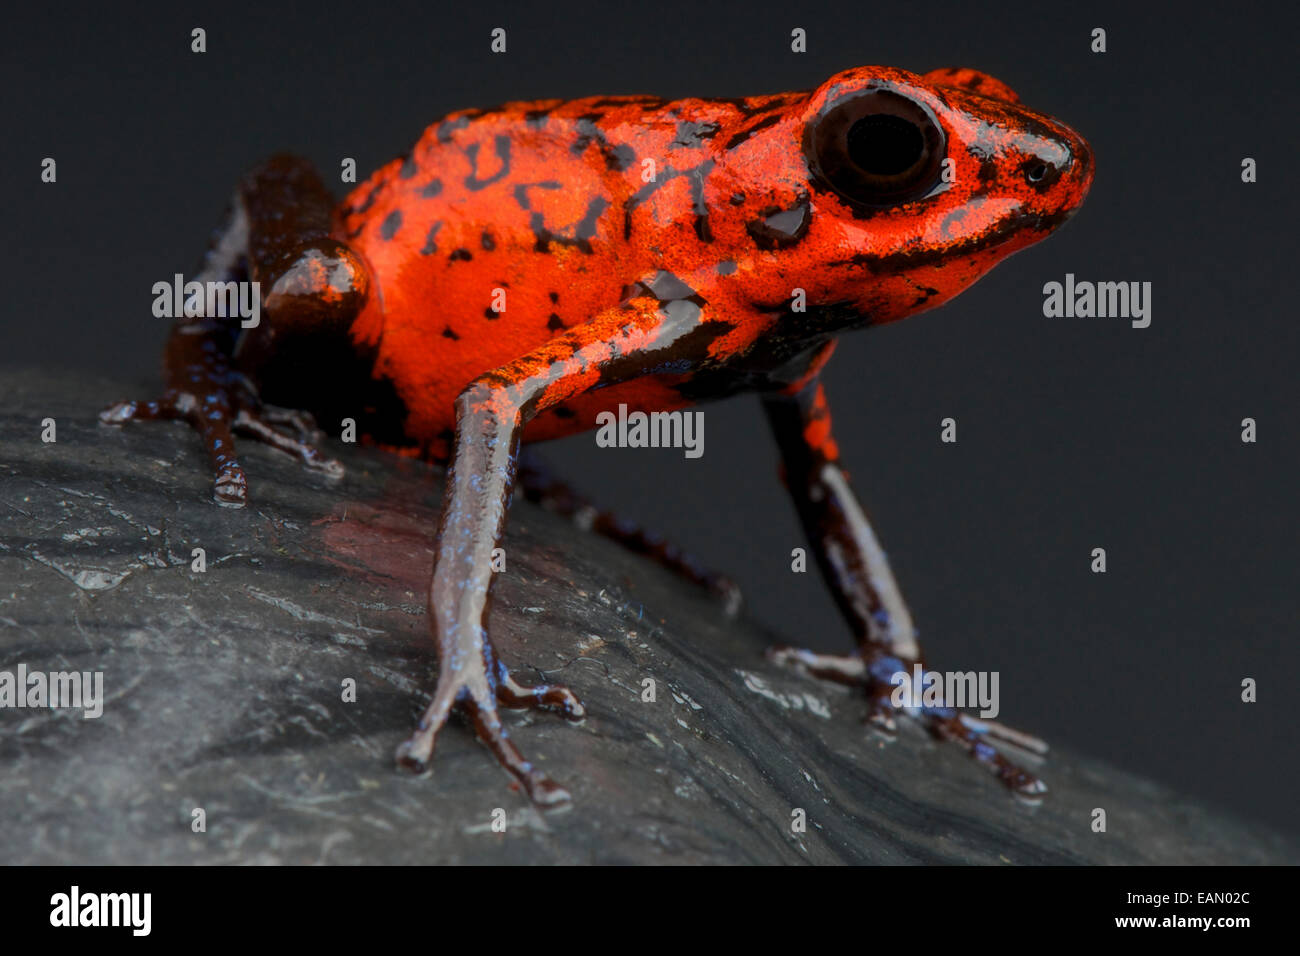 Red strawberry dart frog / Oophaga pumilio Stock Photo